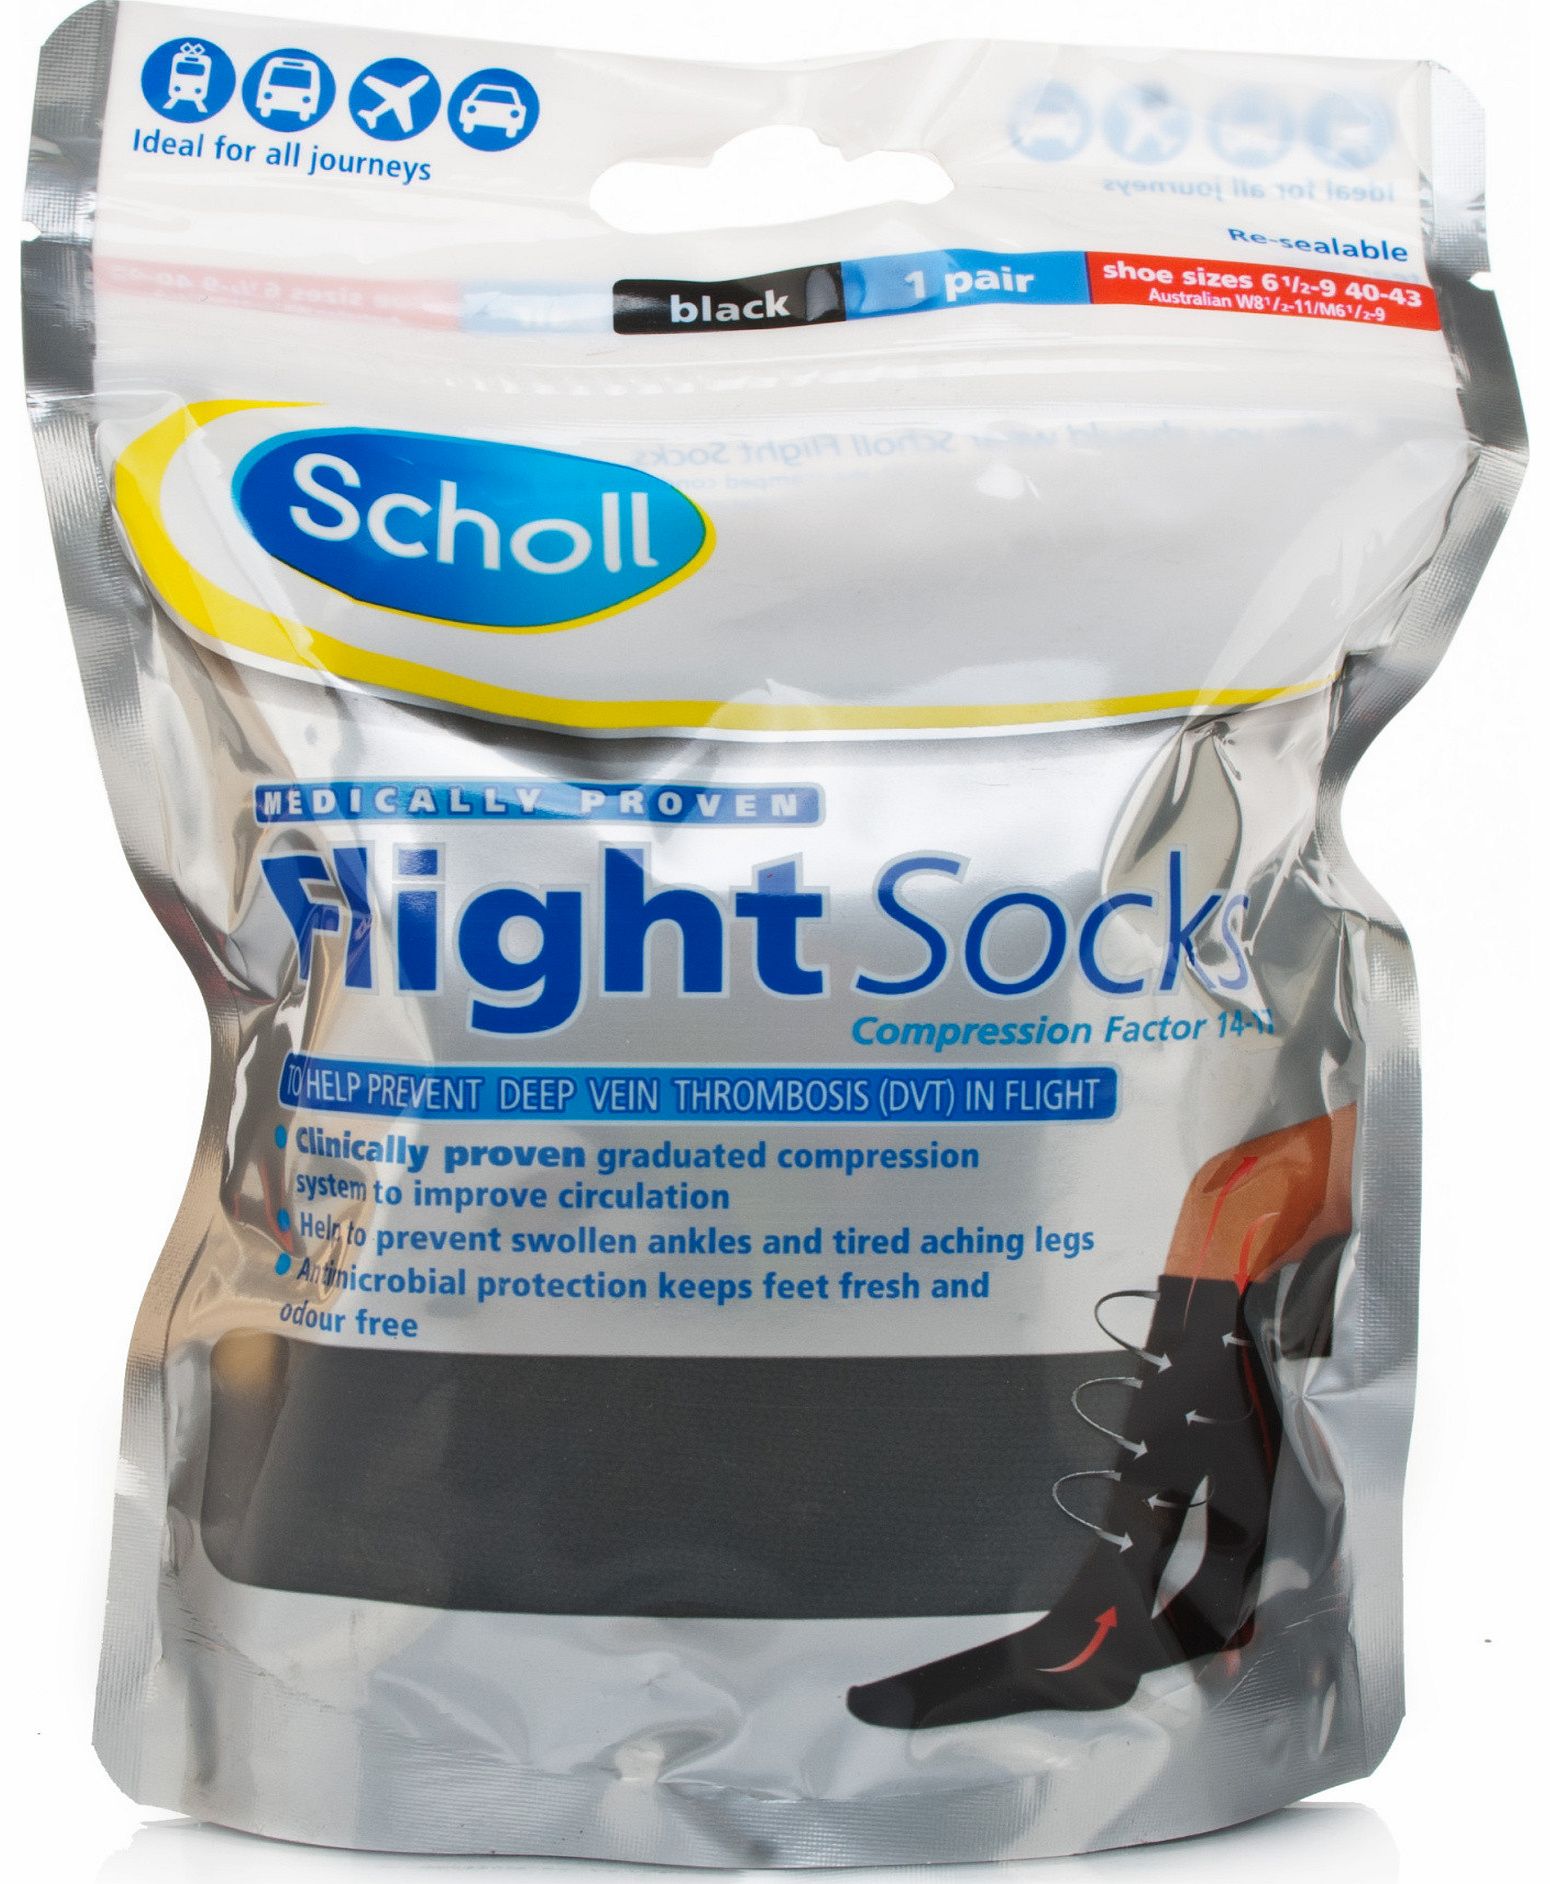 Flight Socks Sizes 6.5-9